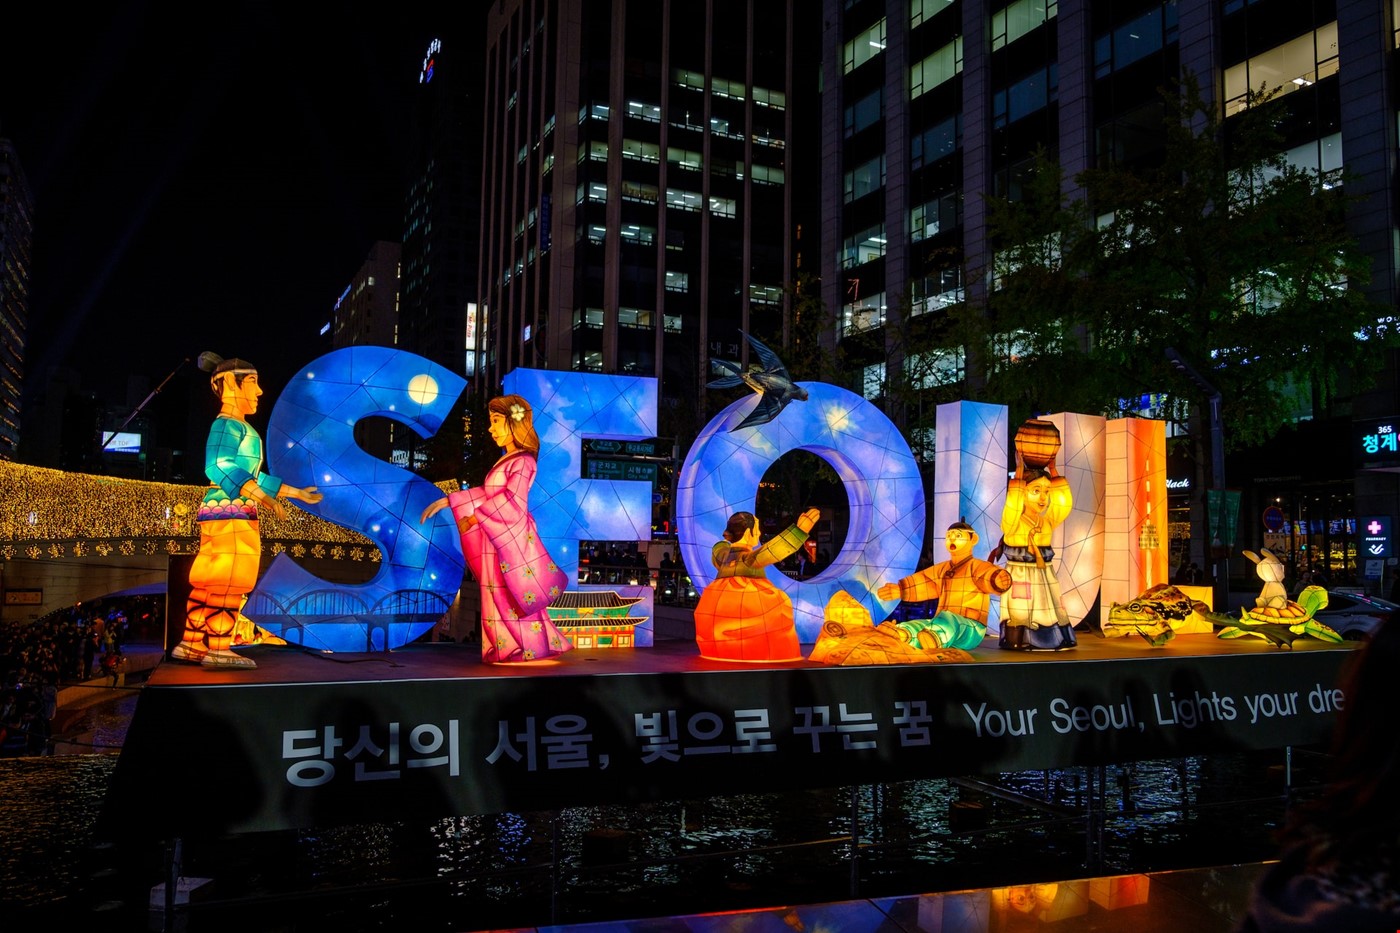 Seoul image